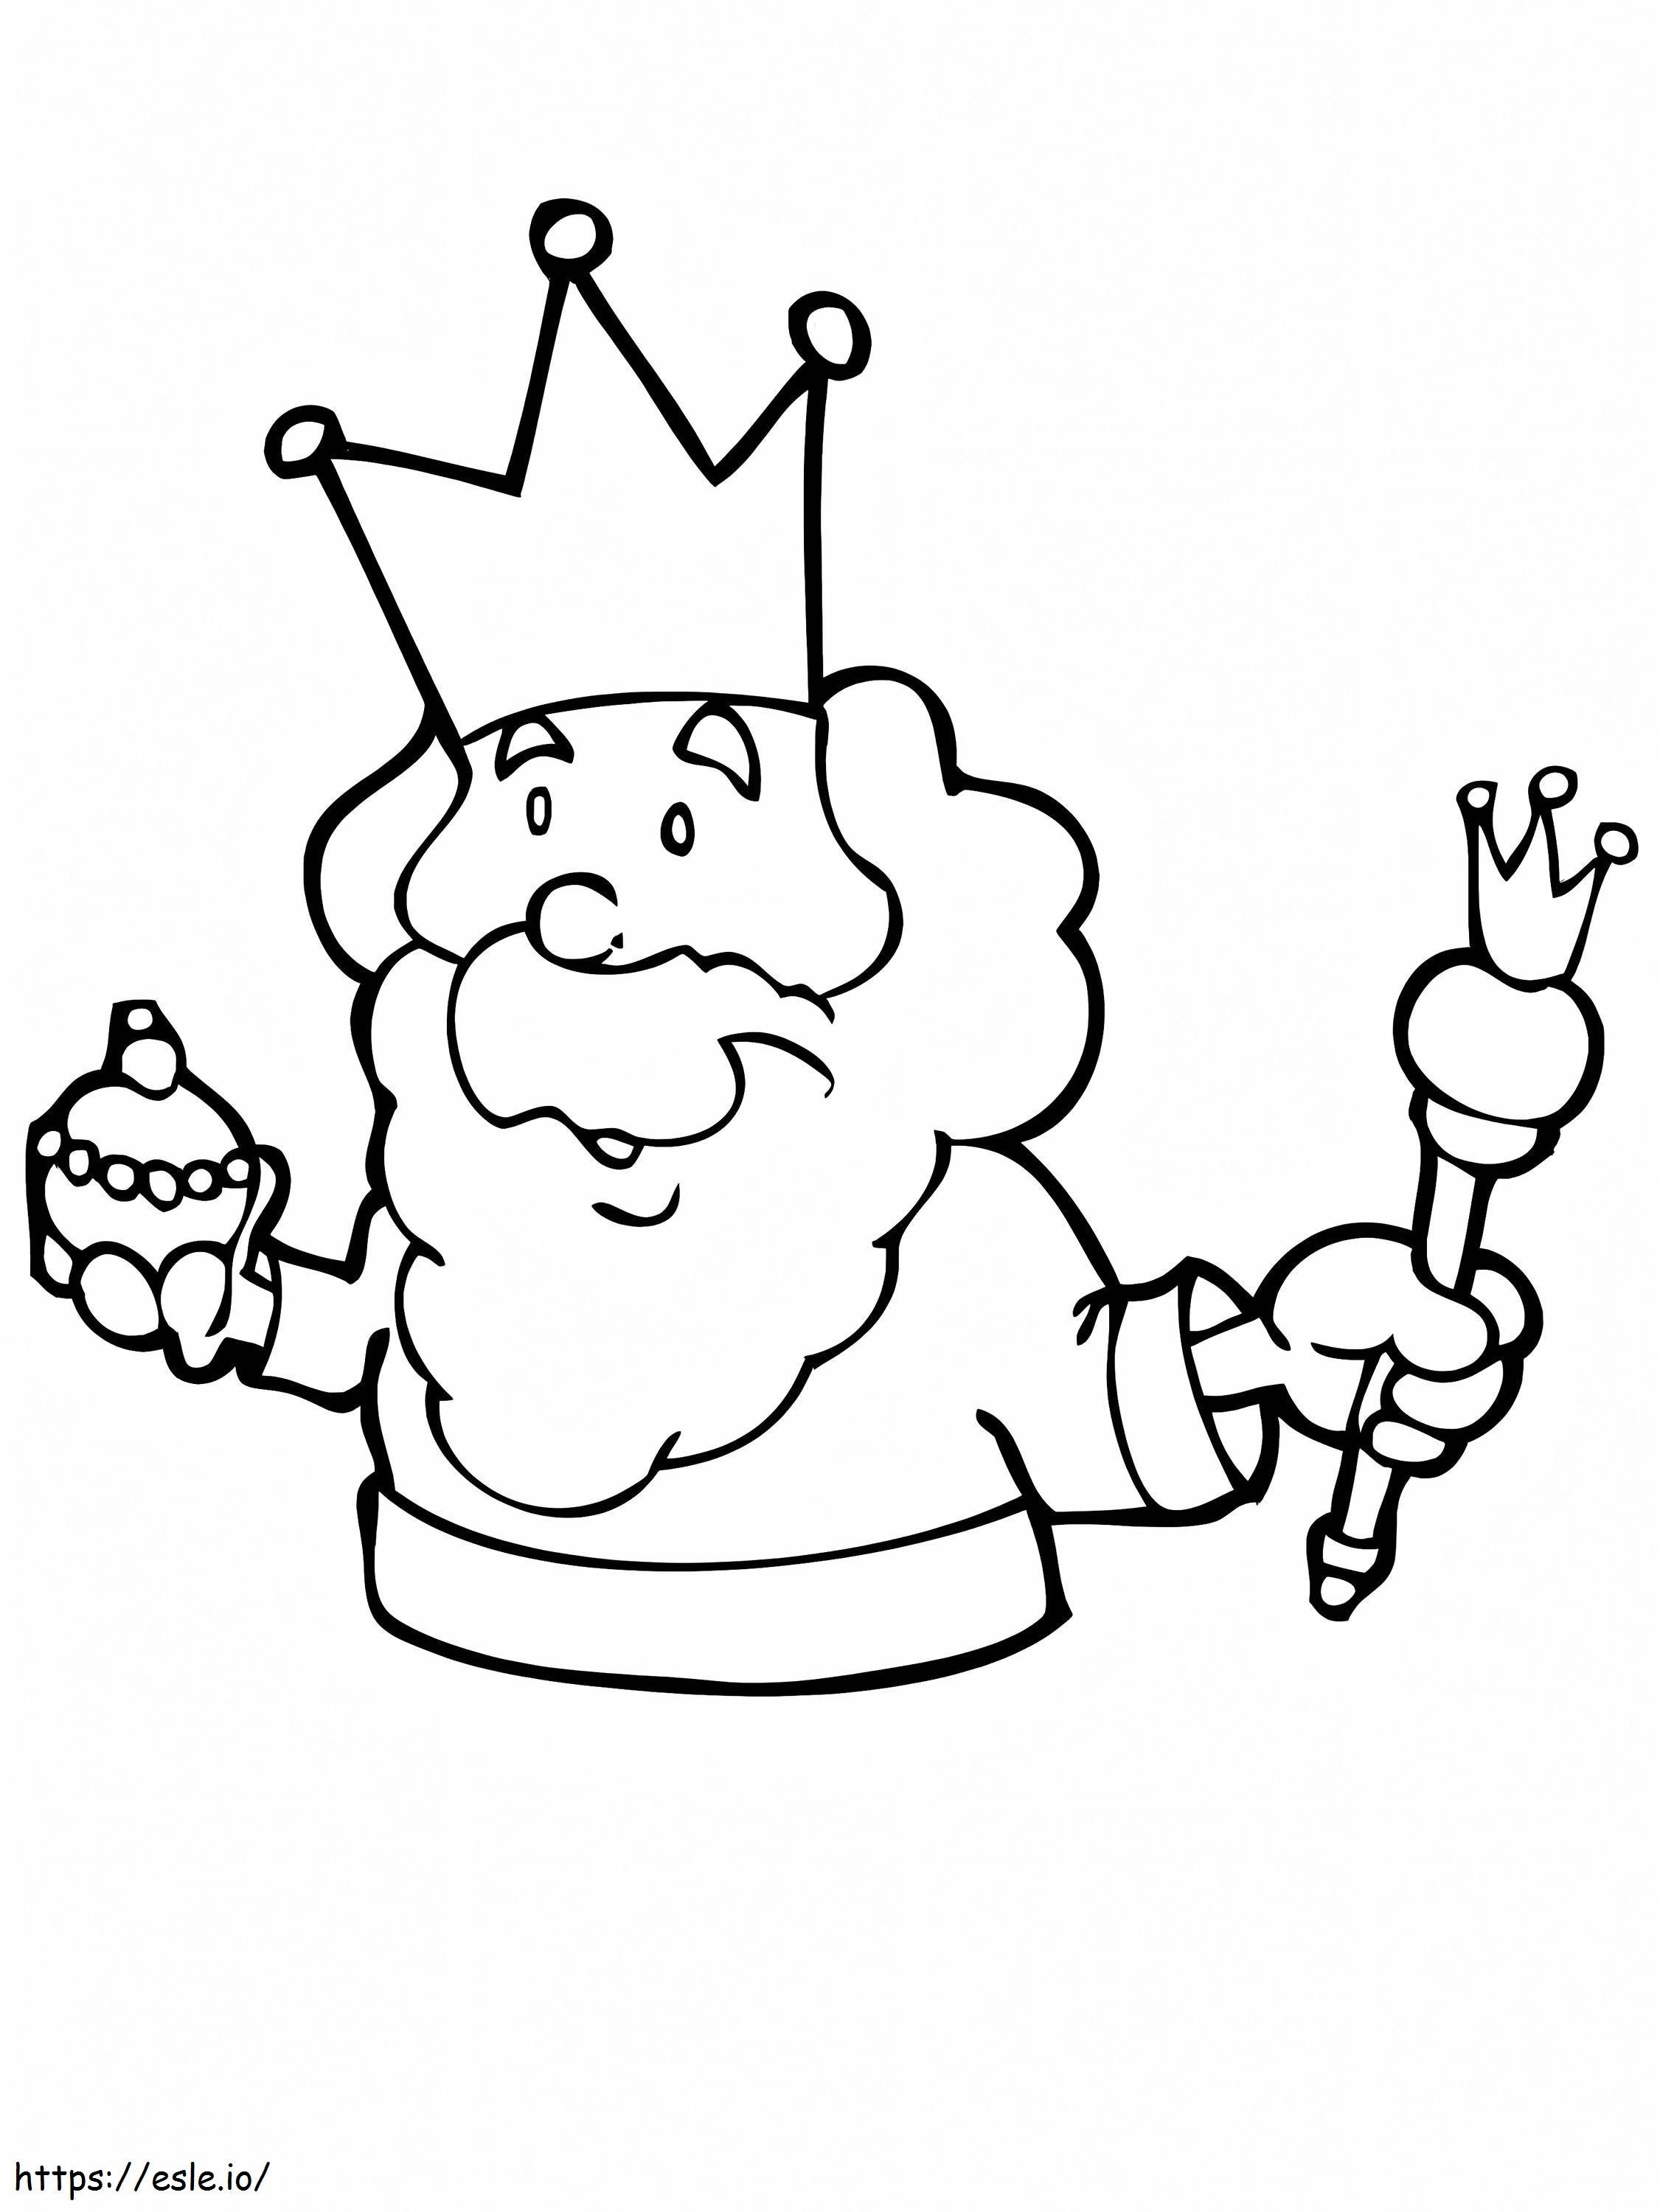 King'S Holding Cupcake ausmalbilder